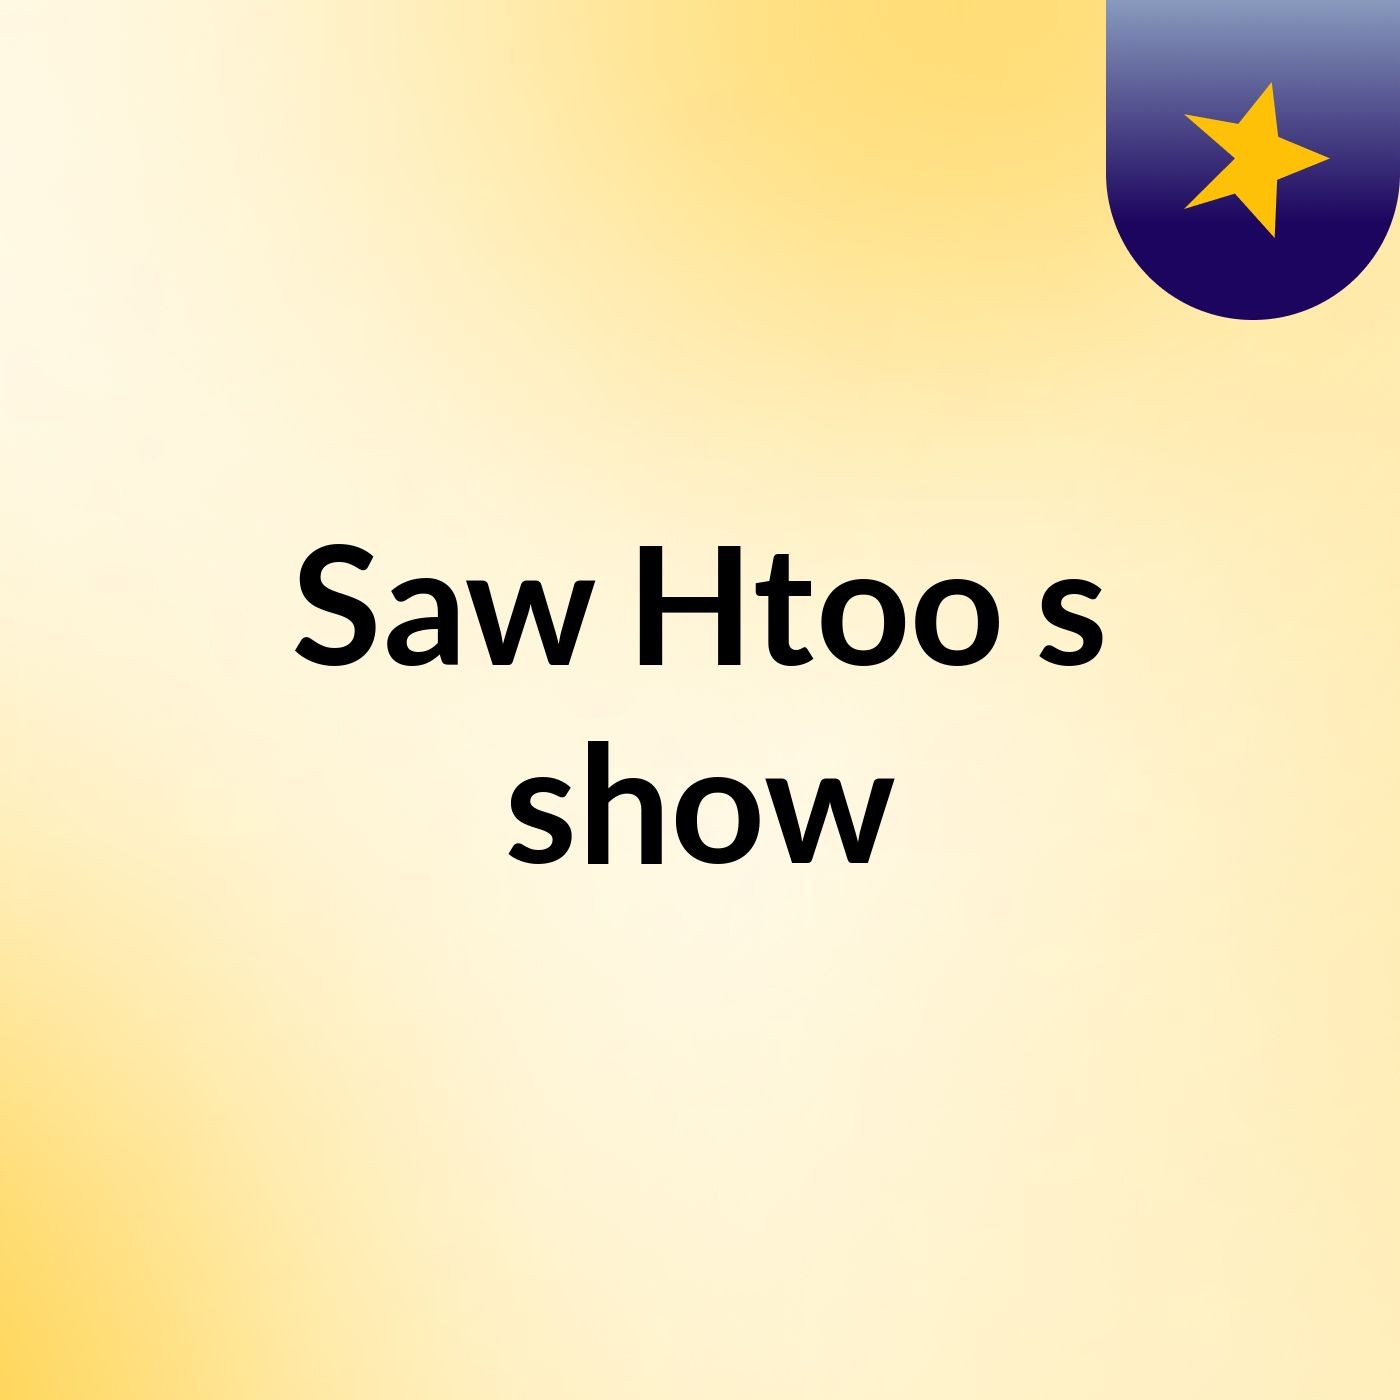 Saw Htoo's show